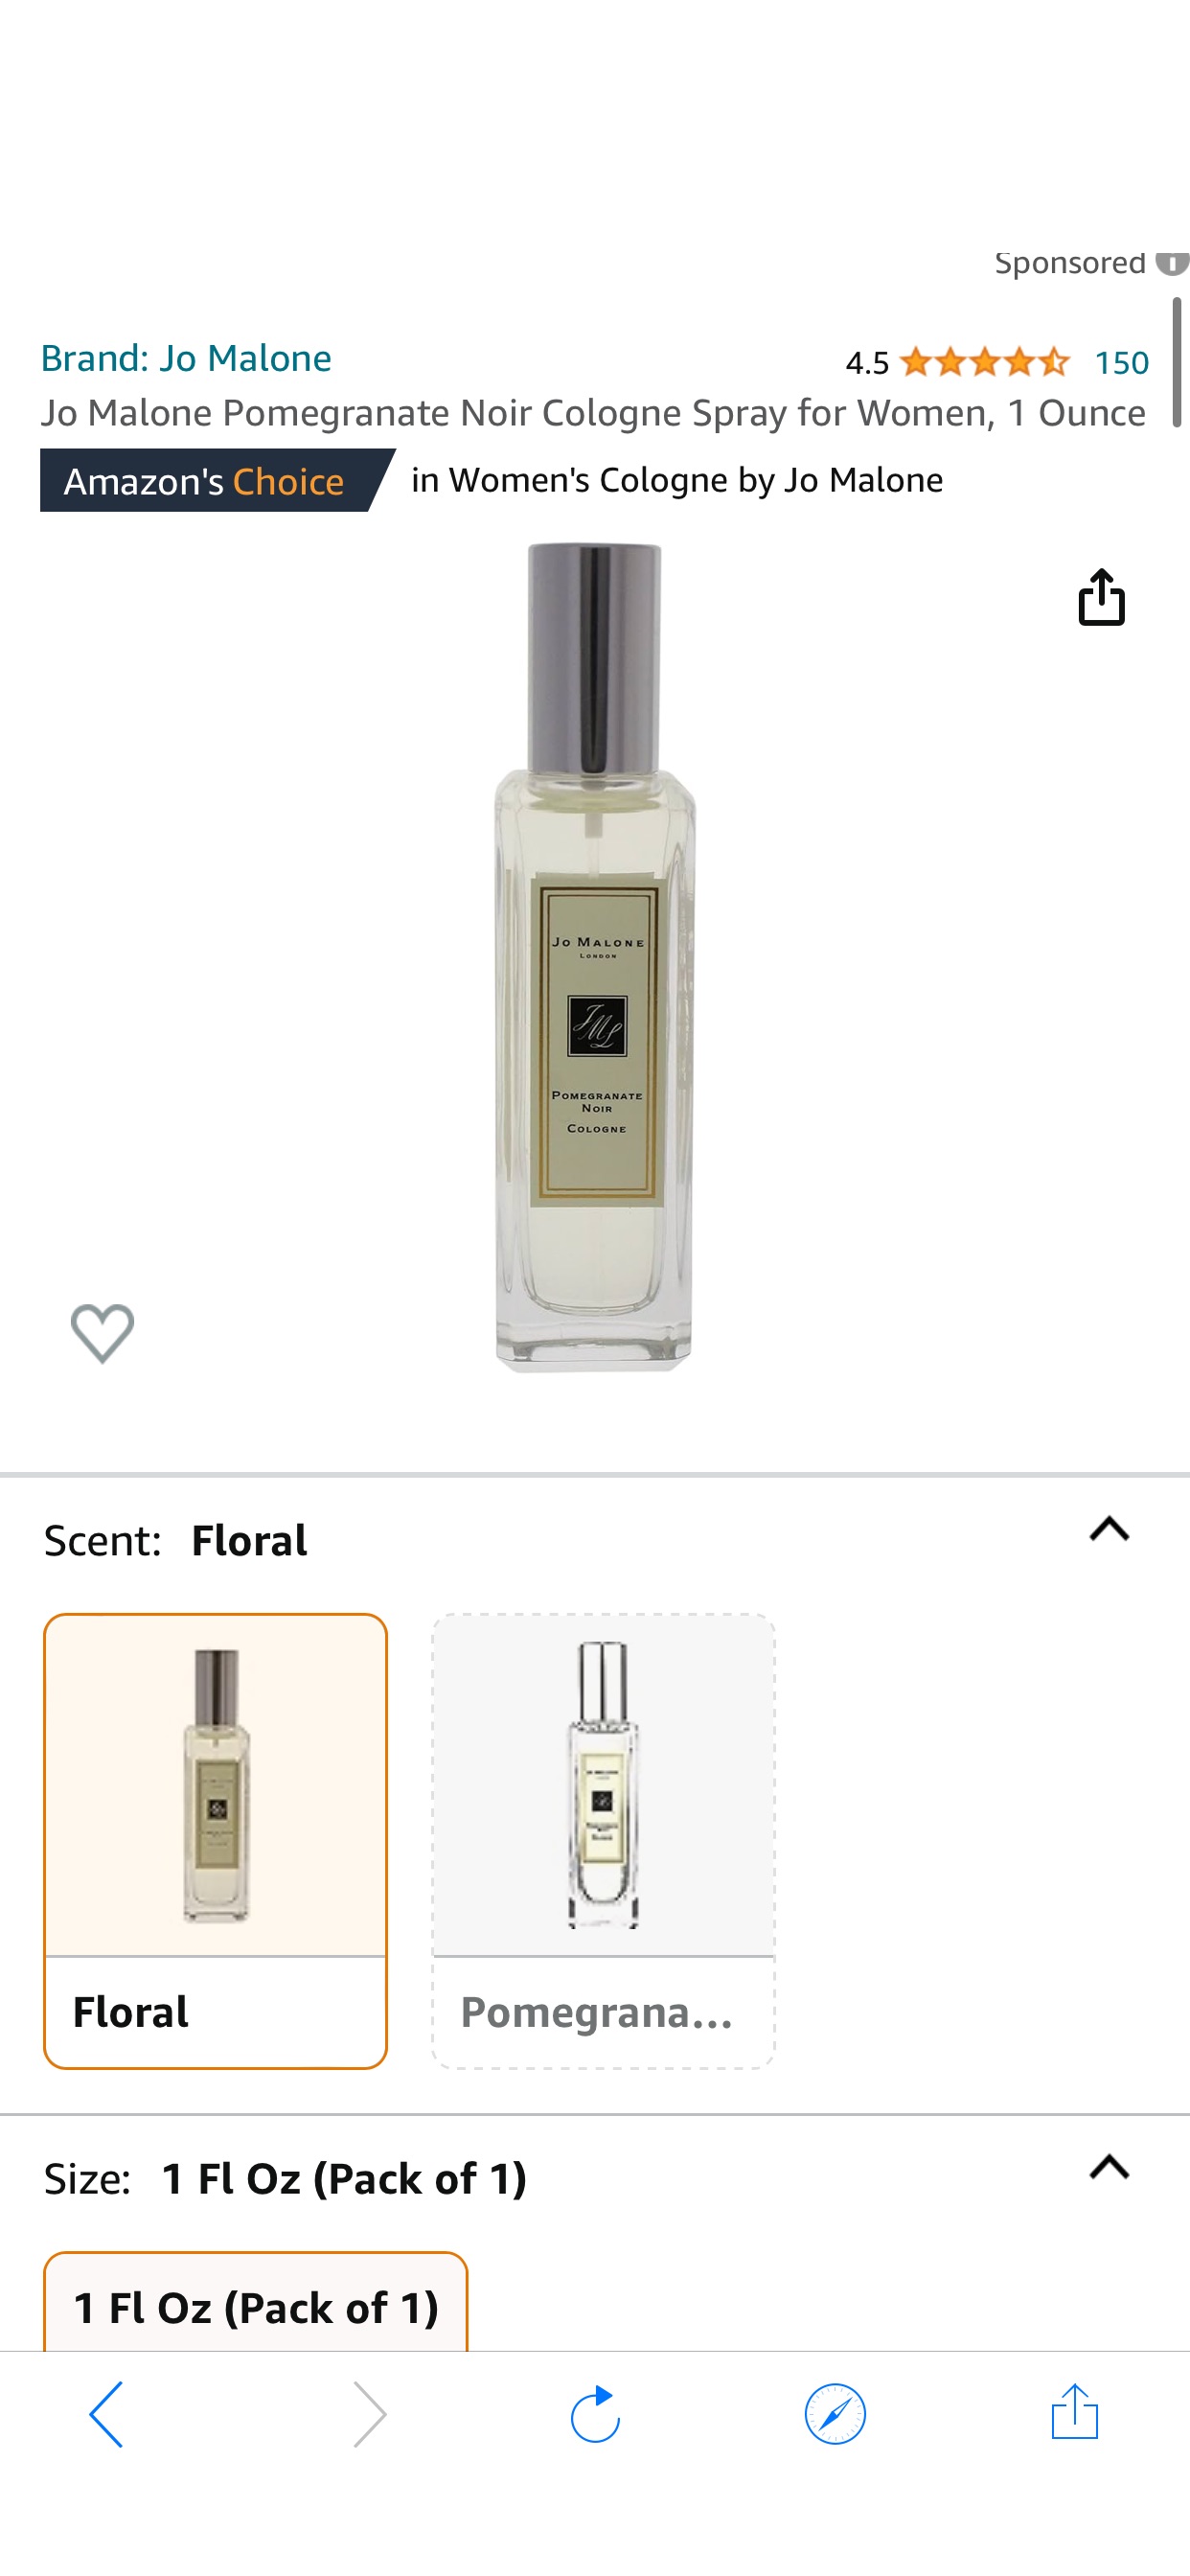 Amazon.com : Jo Malone Pomegranate Noir Cologne Spray for Women, 1 Ounce : Jo Malone Perfume : Beauty & Personal Care 祖马龙石榴香水